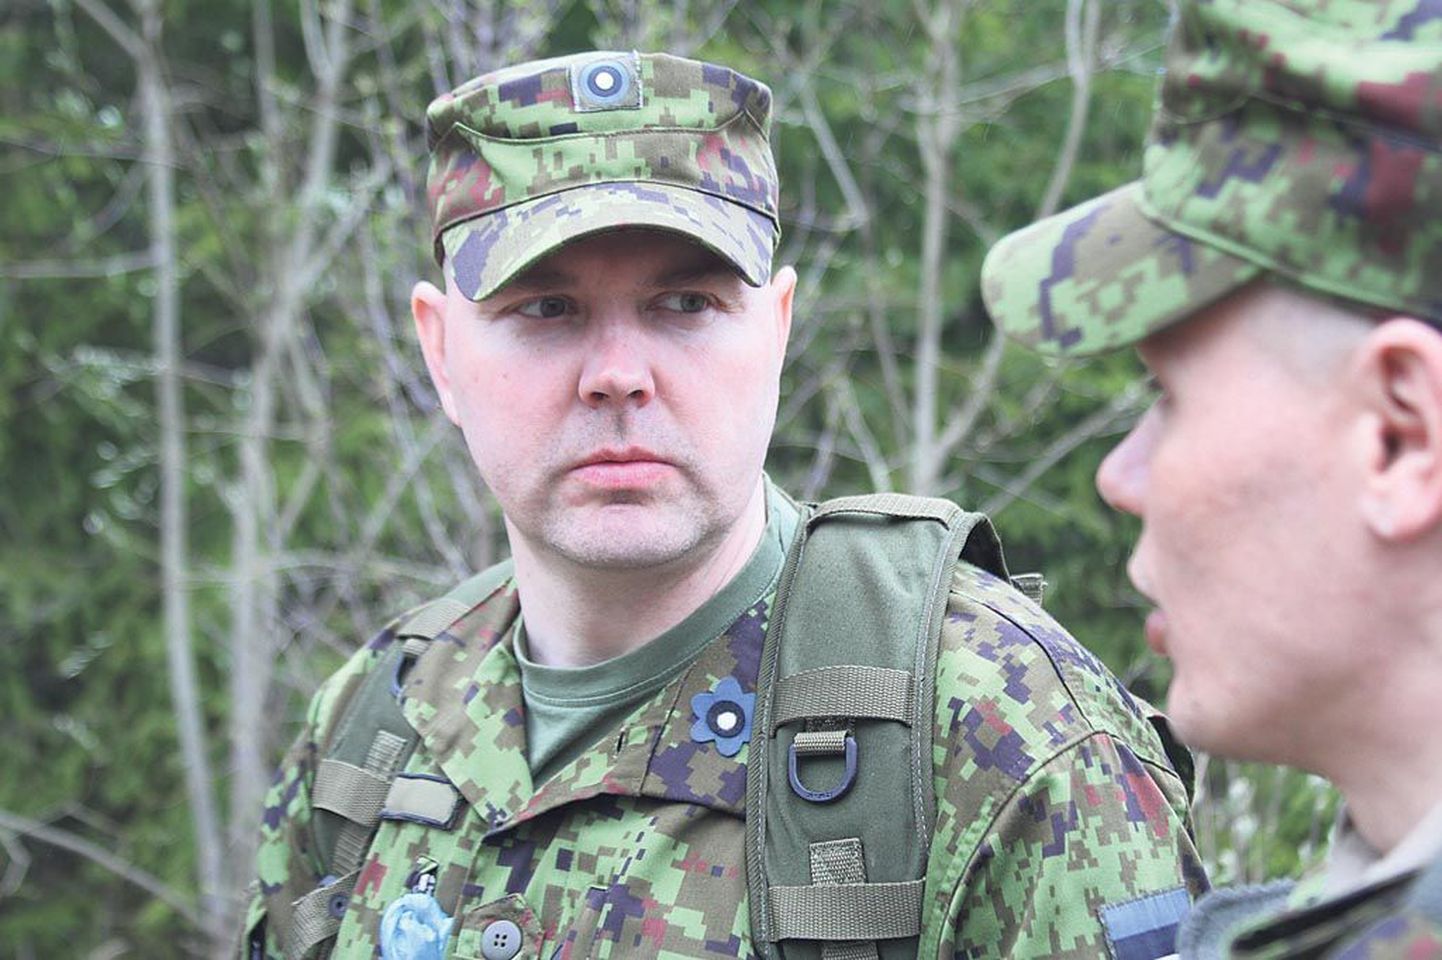 Kaitseliidu Pärnumaa maleva pealikku kolonelleitnant Tõnu Miili (vasakul) intervjueeris Kikepera metsade vahel kaitseliitlasest ajakirjanik Asso Puidet.